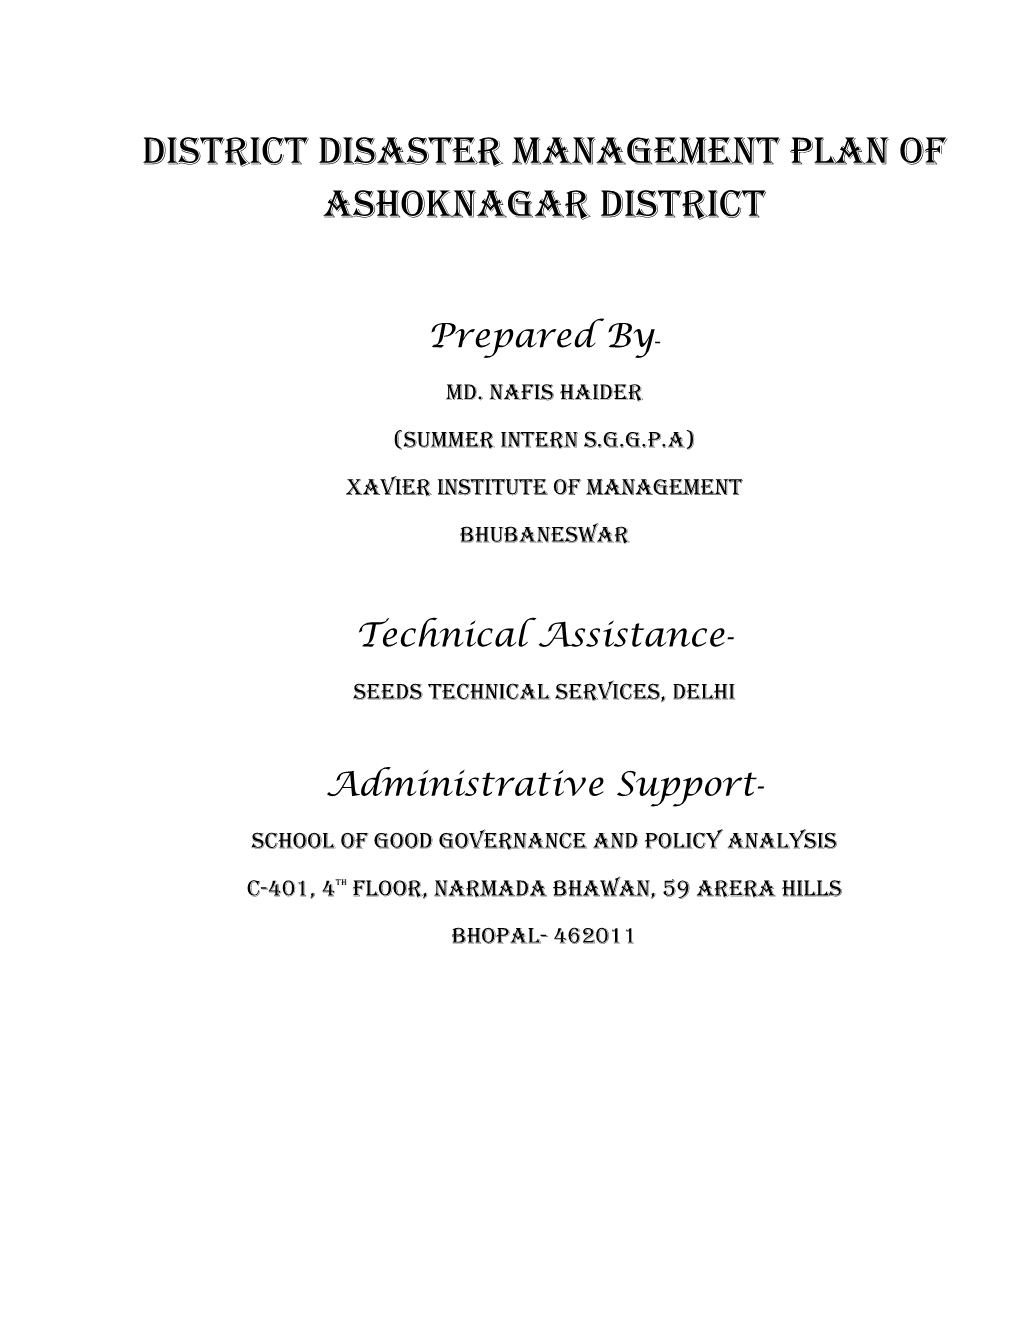 District Disaster Management Plan of Ashoknagar District